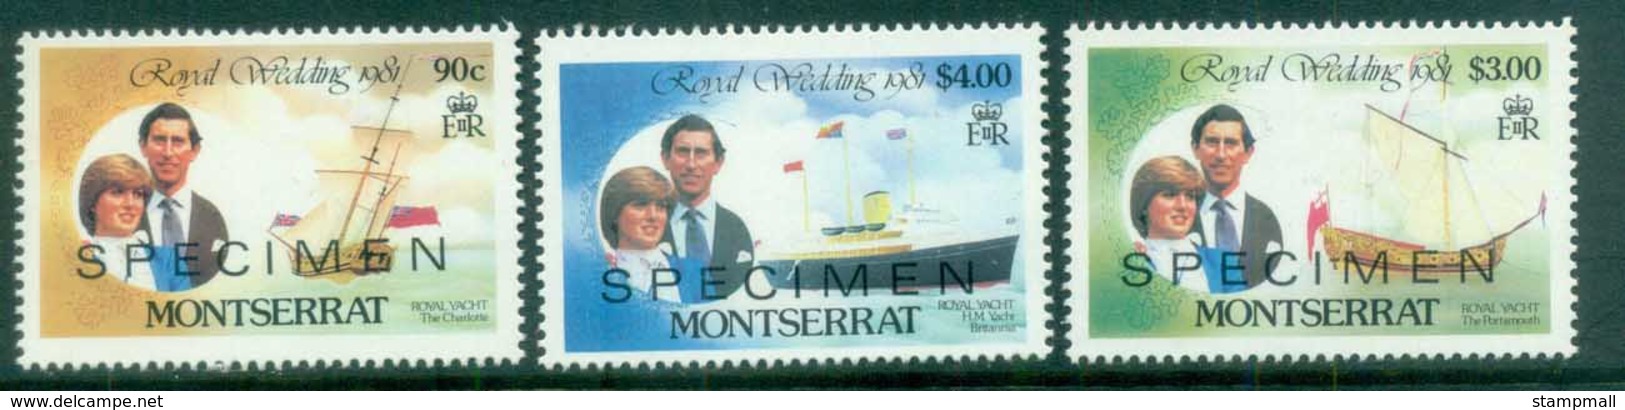 Montserrat 1981 Charles & Diana Royal Wedding 3v. SPECIMEN Opt MUH Lot81895 - Montserrat